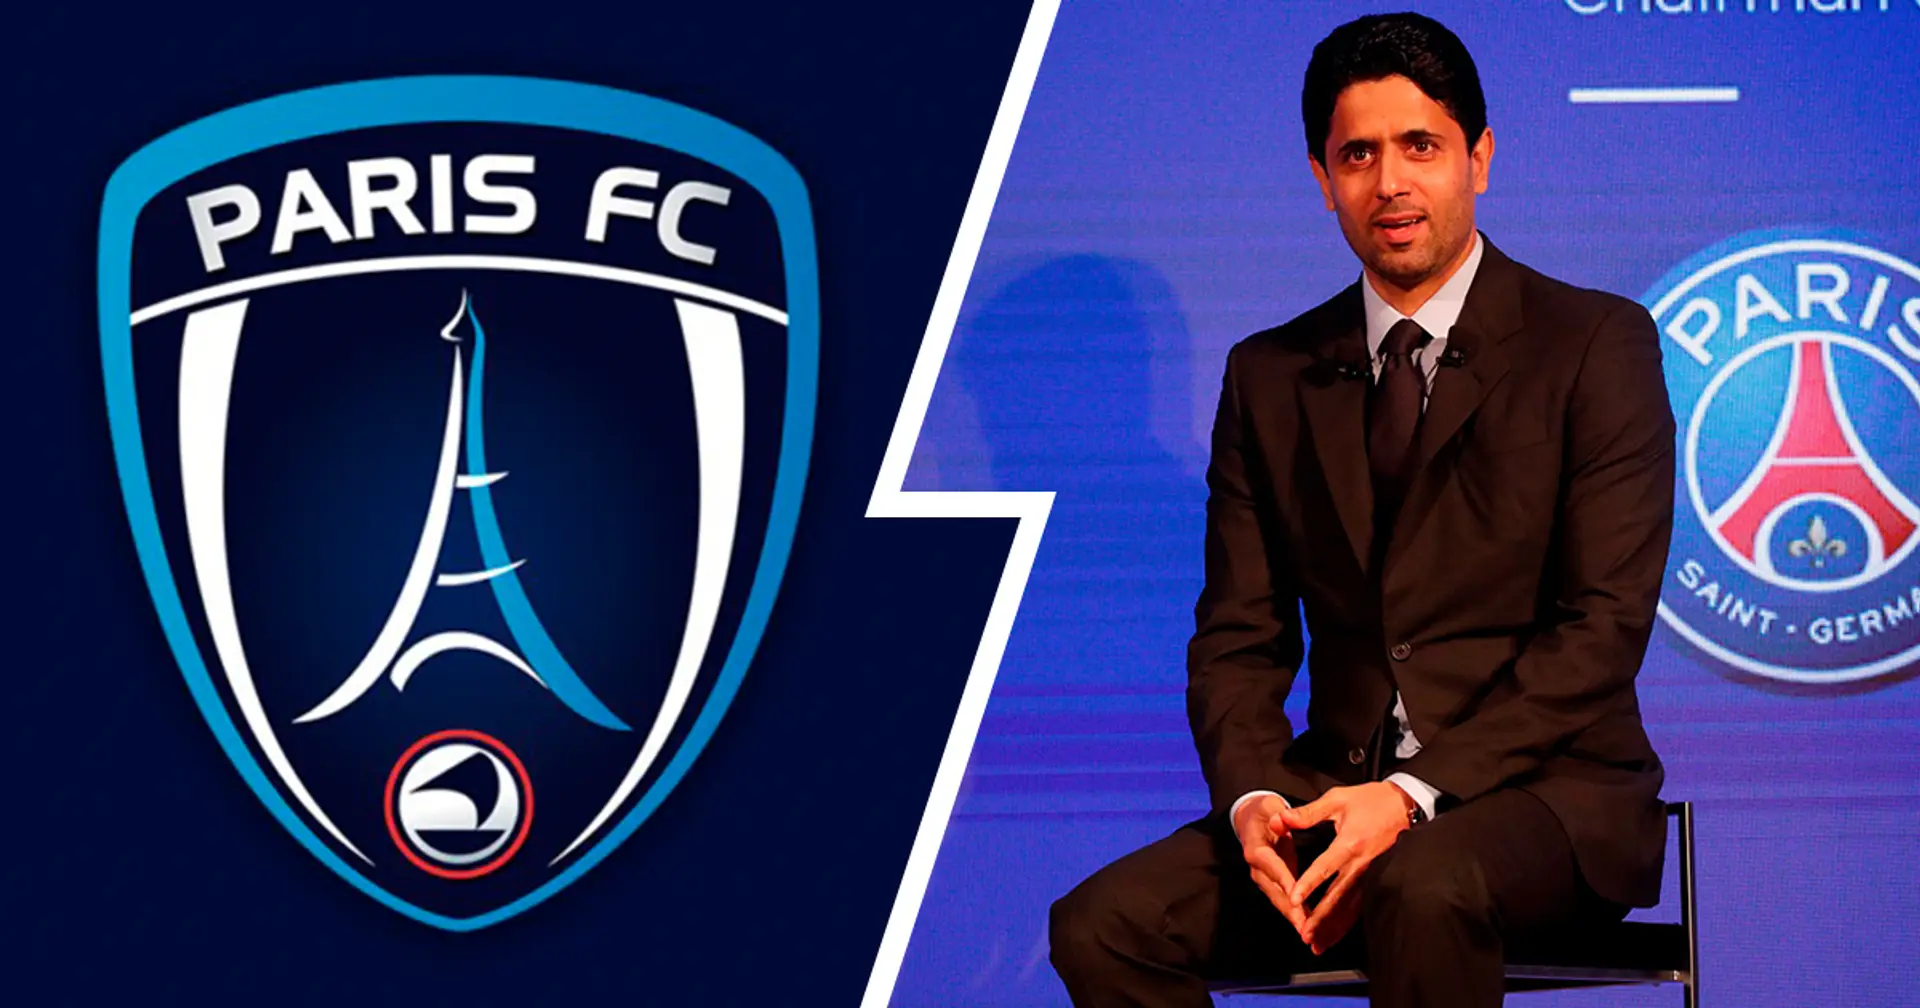 Paris clubs and Arab investors love story continues as Paris FC and Kingdom of Bahrain enter partnership